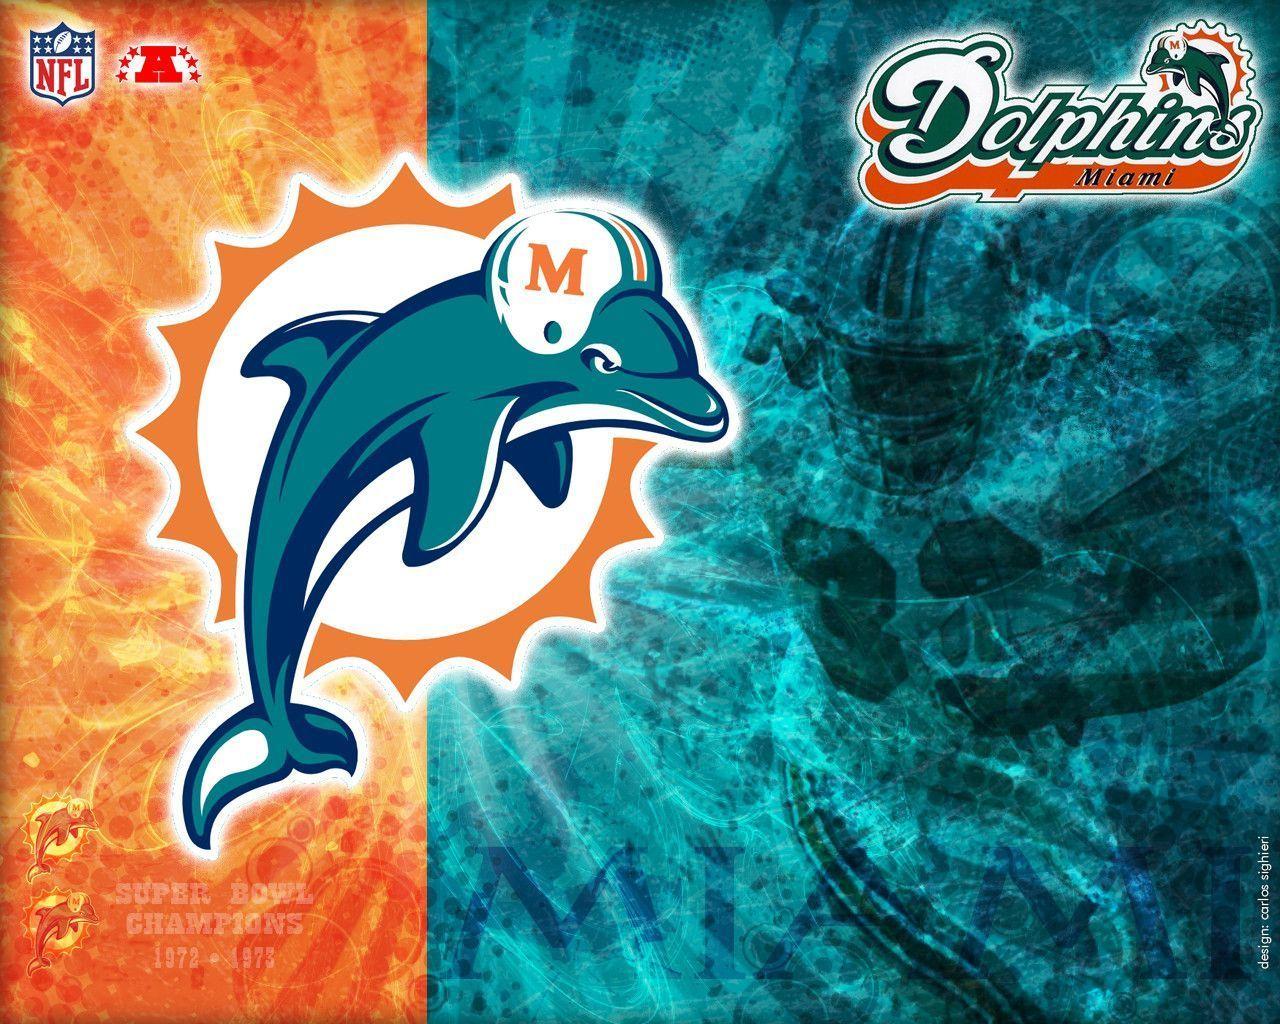 Fondos de pantalla de Miami Dolphins. Wallpaper de Miami